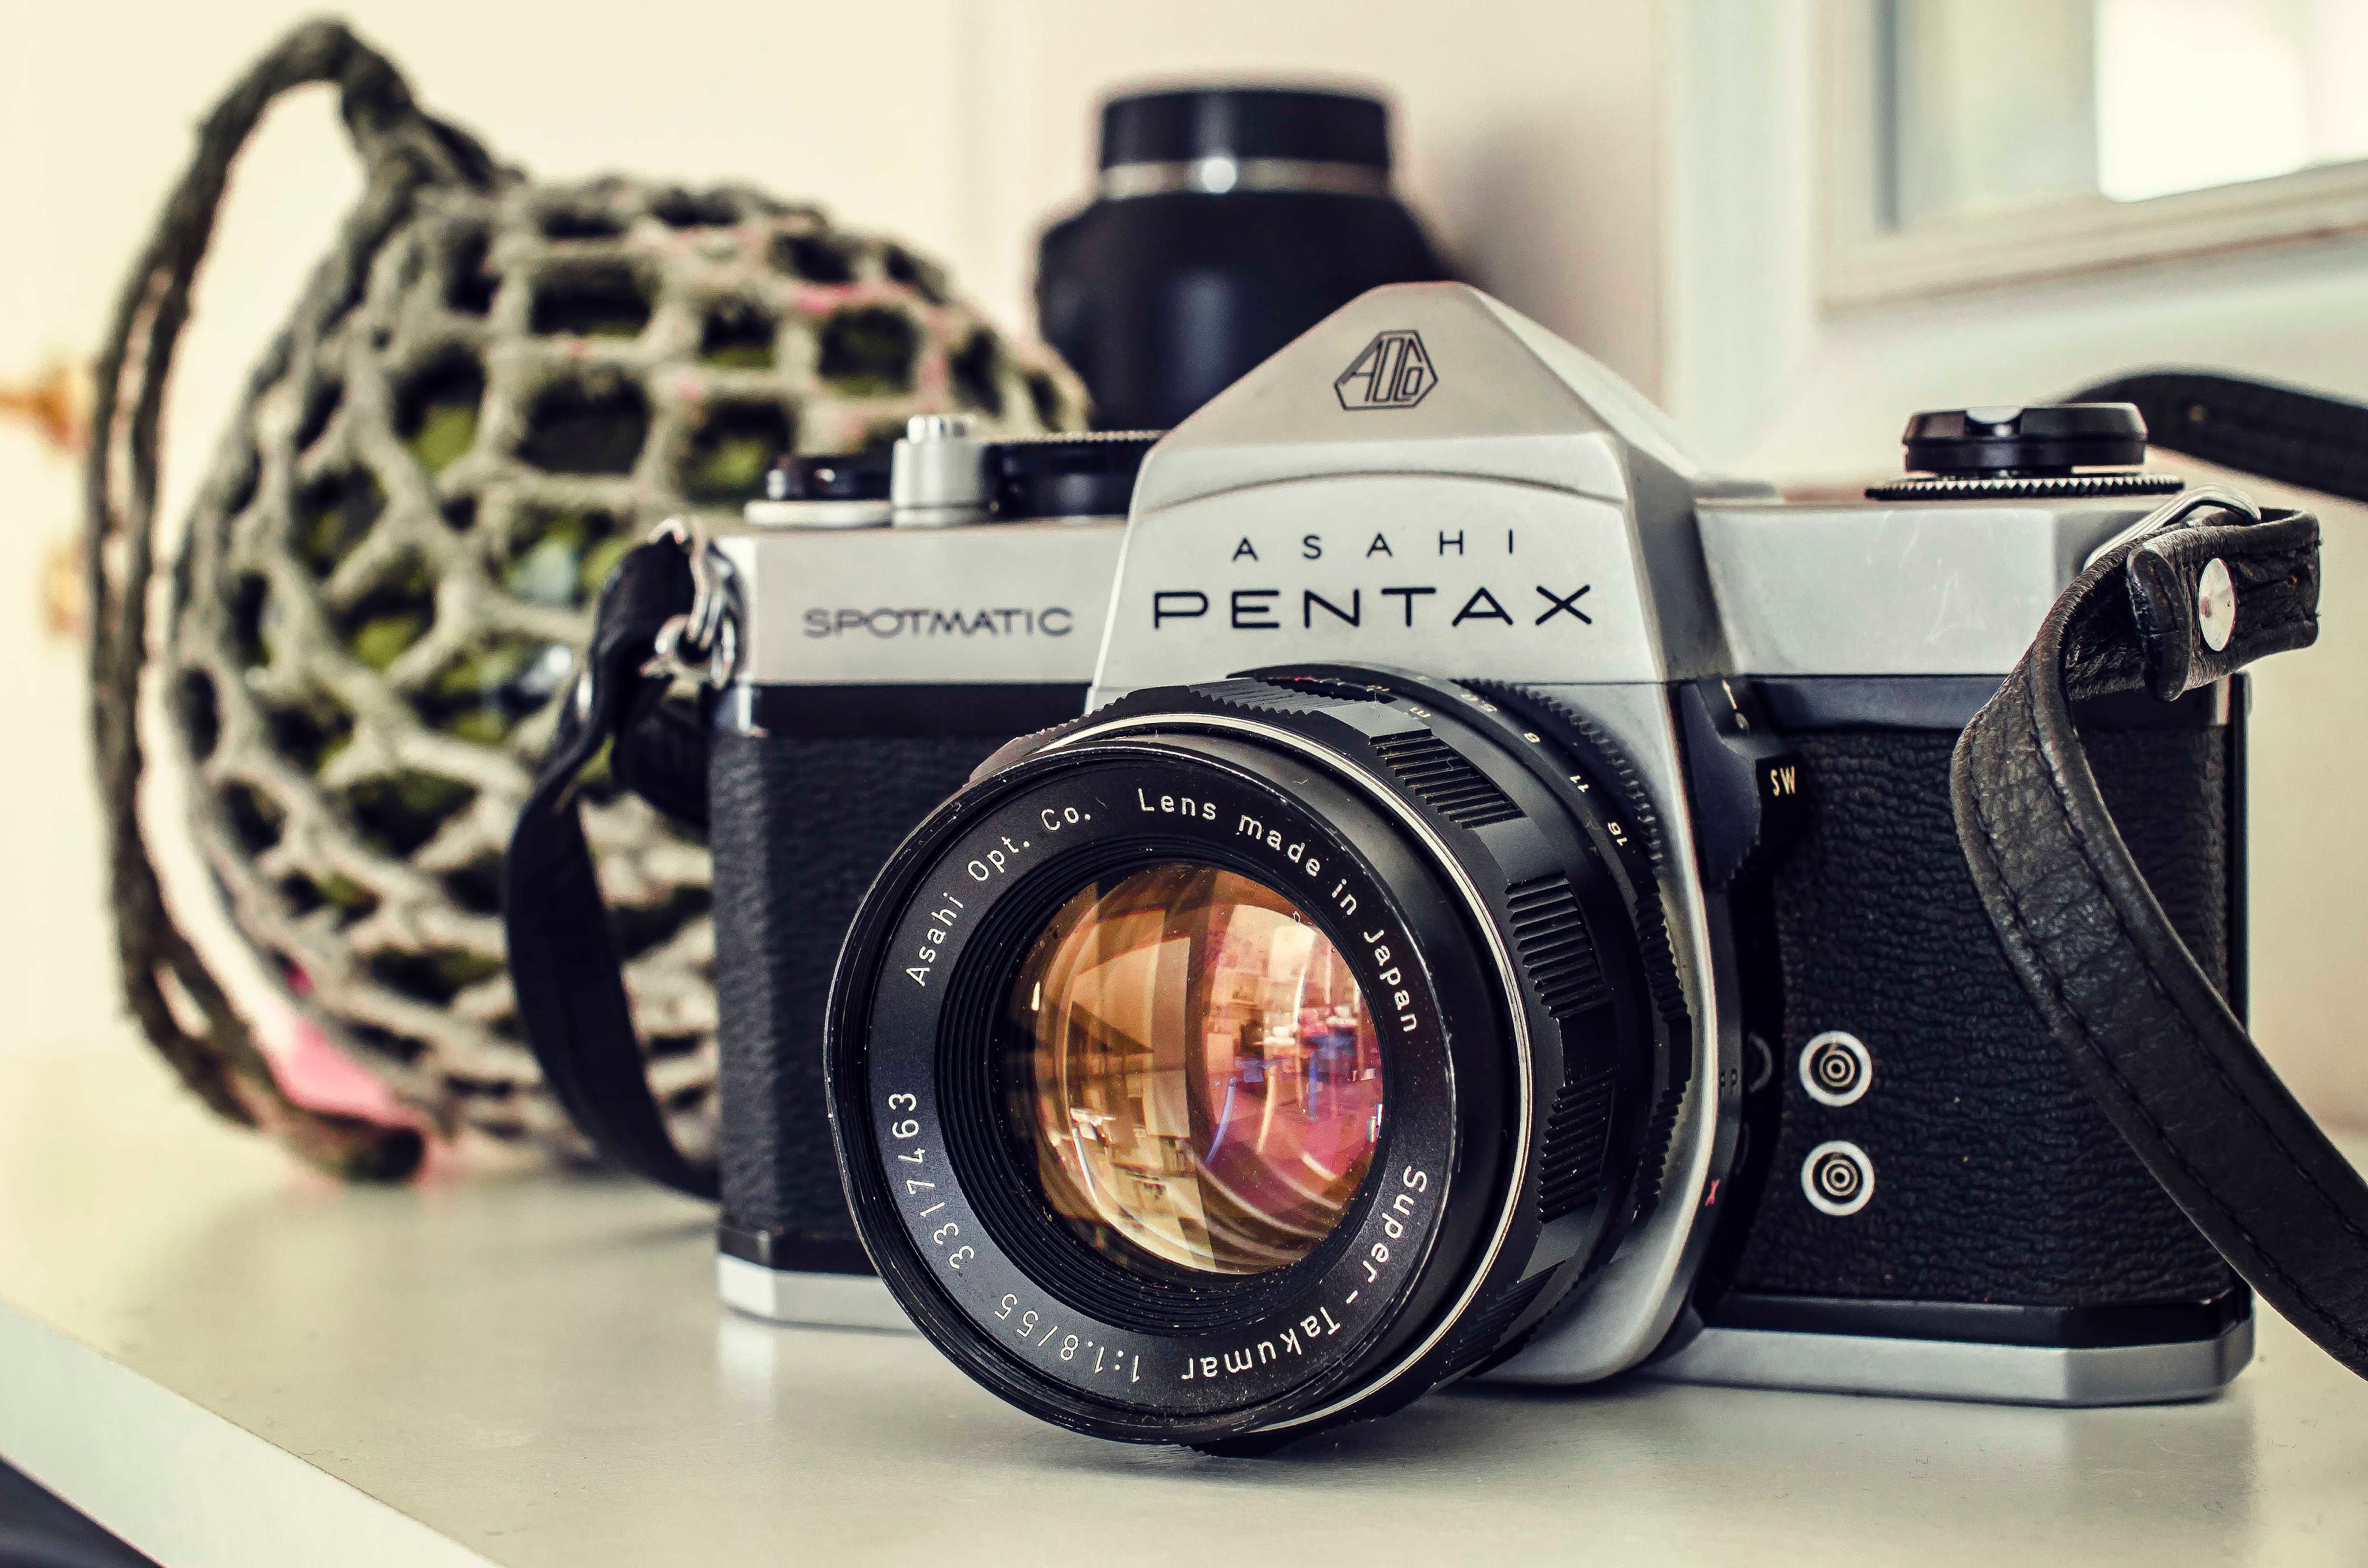 Unboxing Retro Vintage Camera | Pentax Asahi Spotmatic SP - YouTube